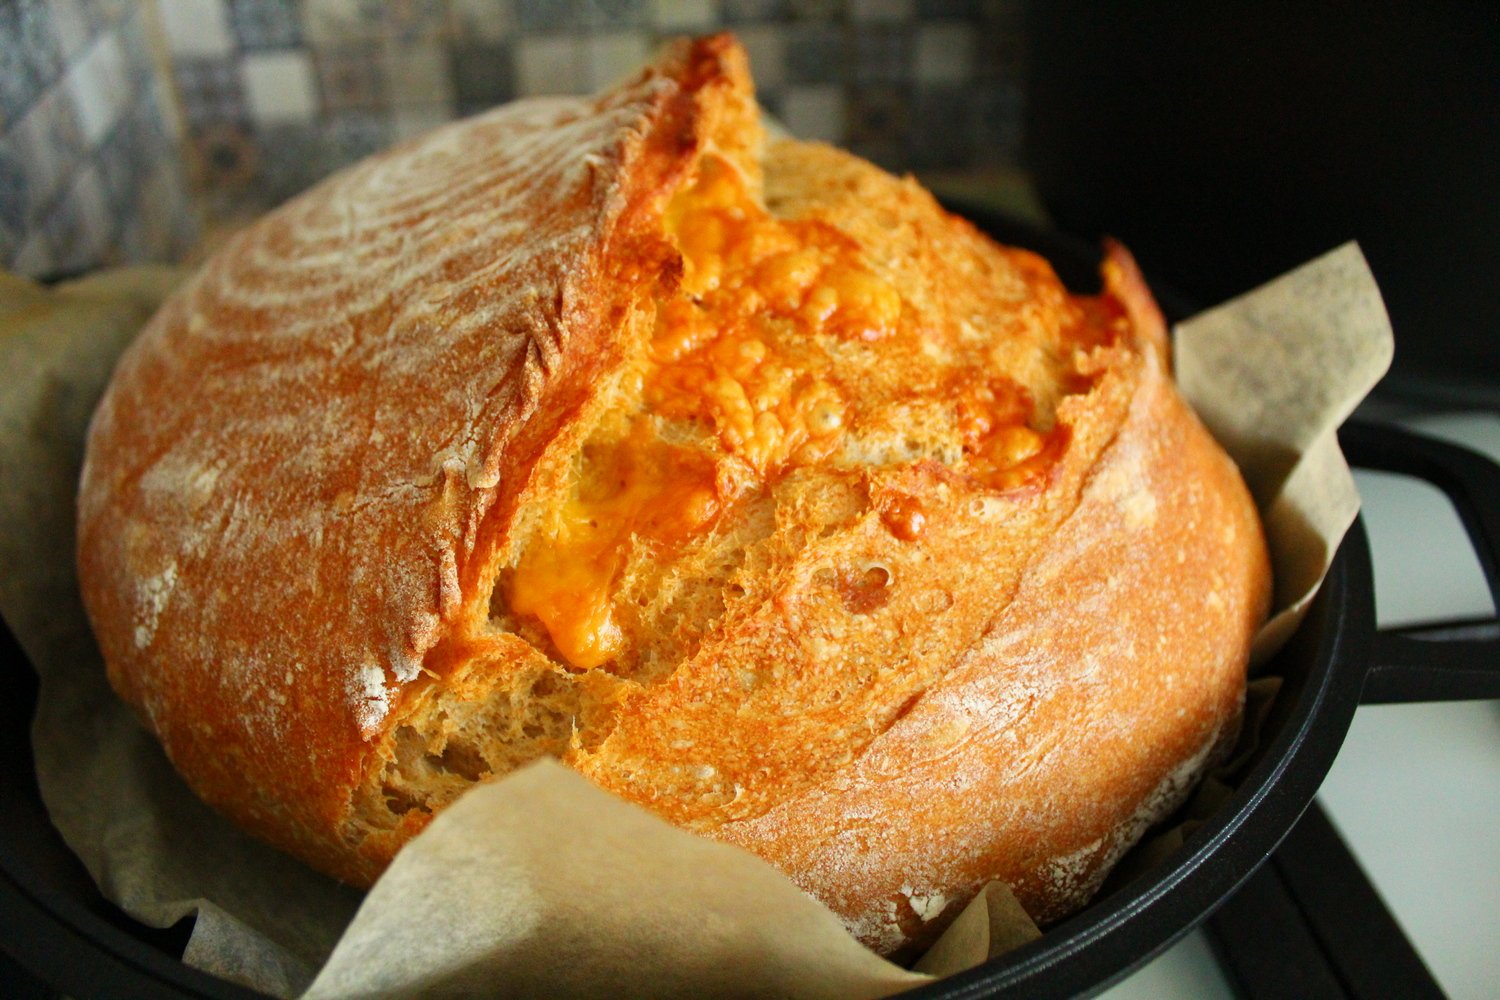 pshenichno rzhanojj khleb s syrom: poshagovyjj recept khleba na opare pulish56 Пшенично житній хліб з сиром: покроковий рецепт хліба на опарі пулиш